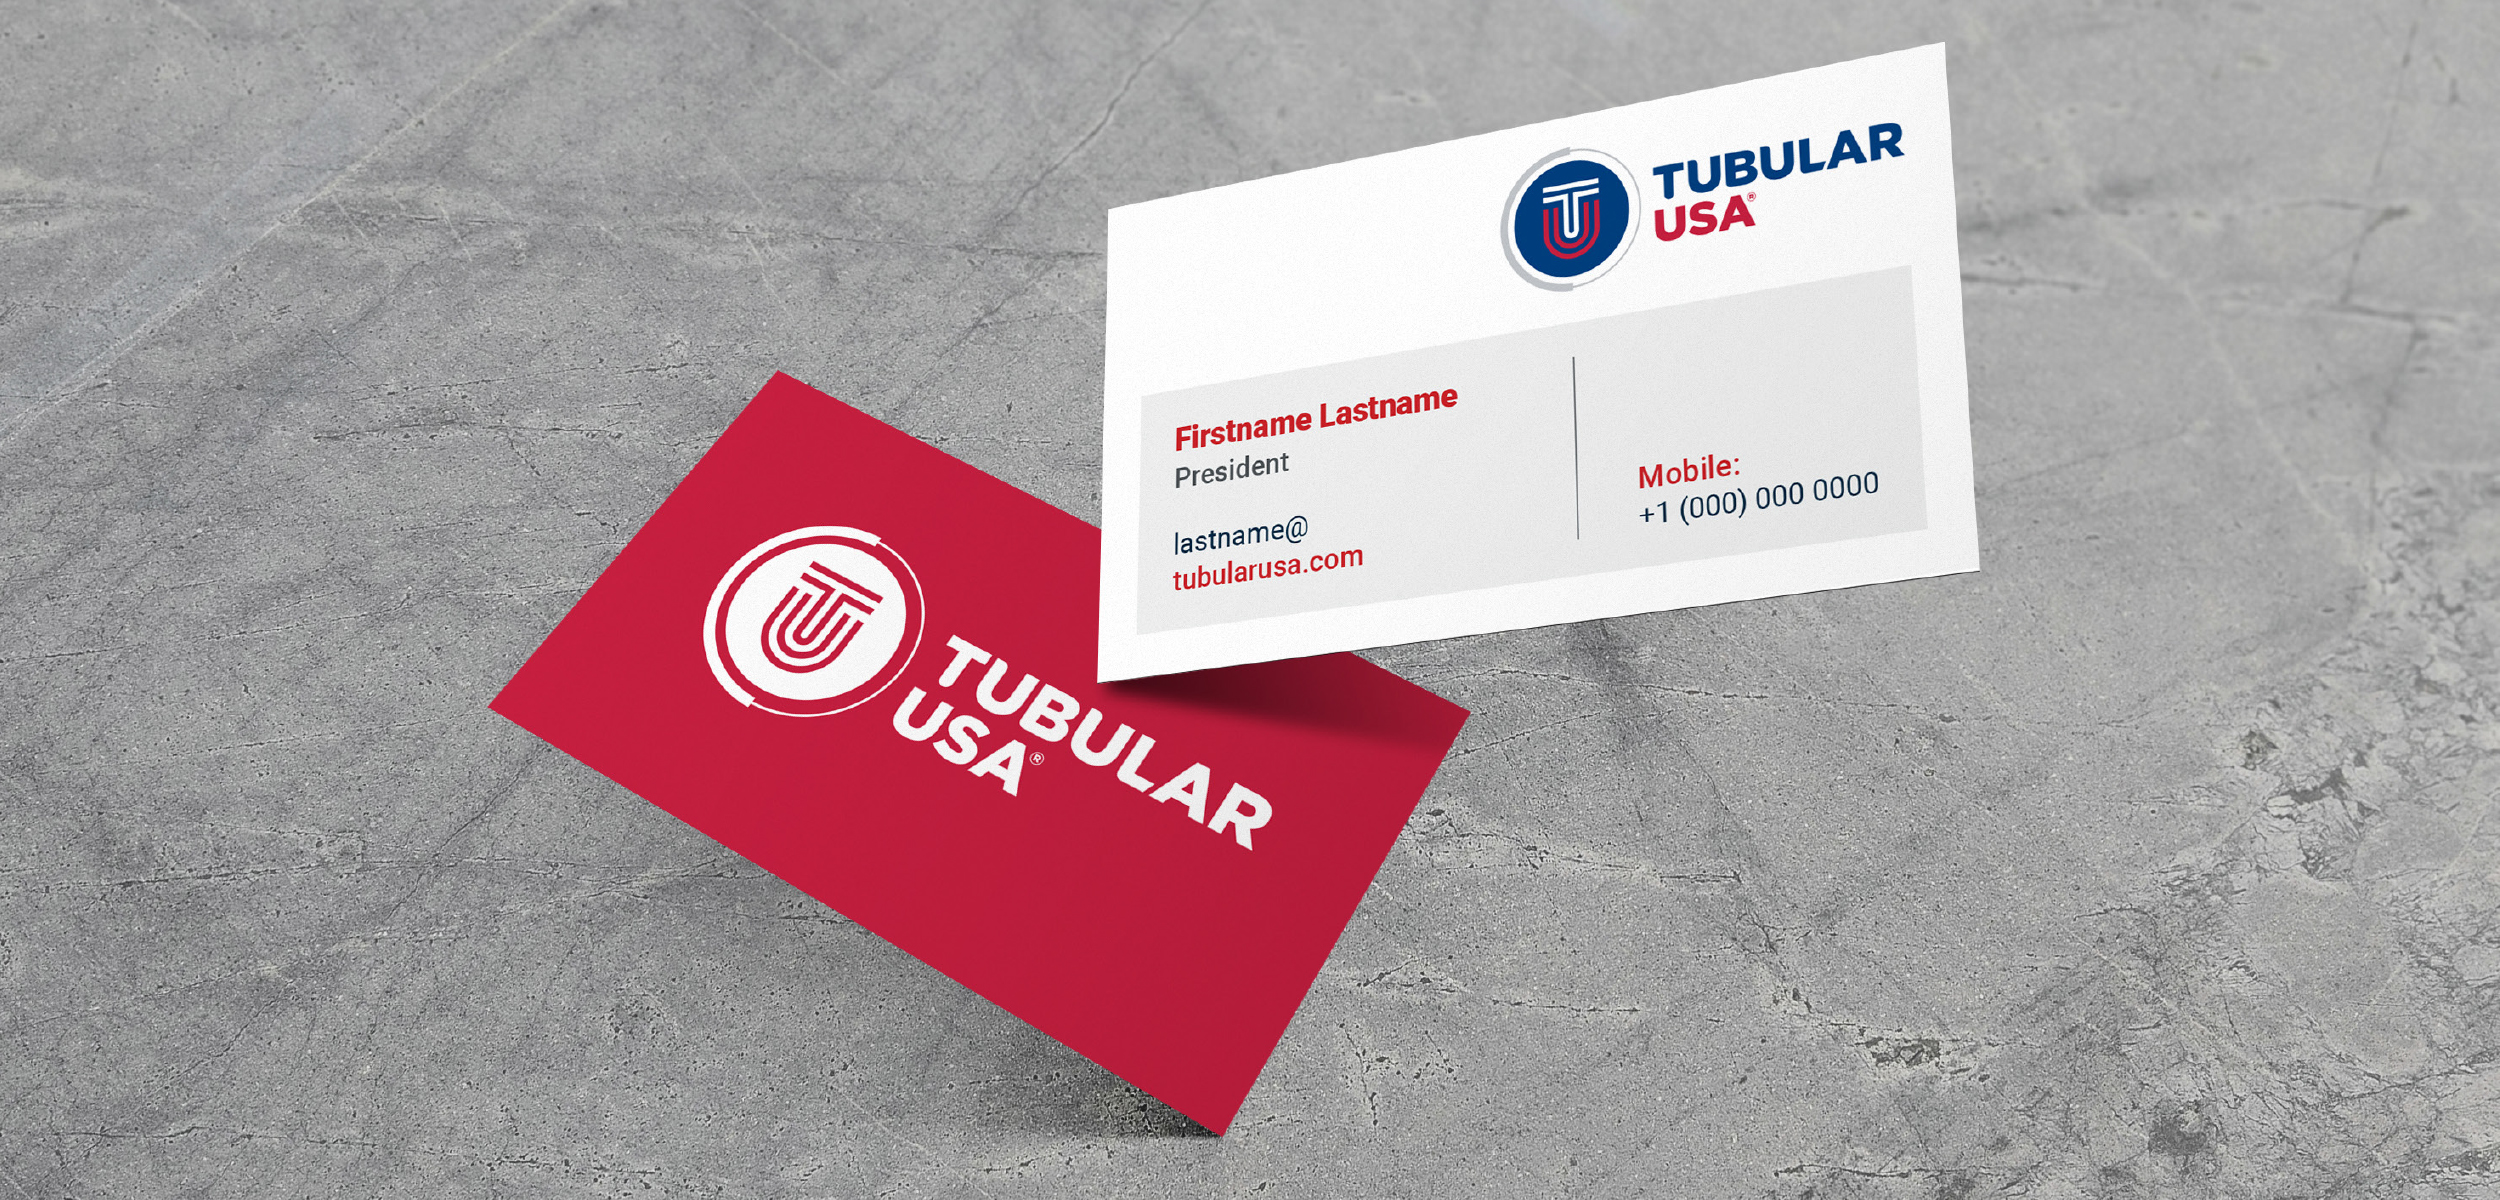 Tubular USA's New Logo Artwork